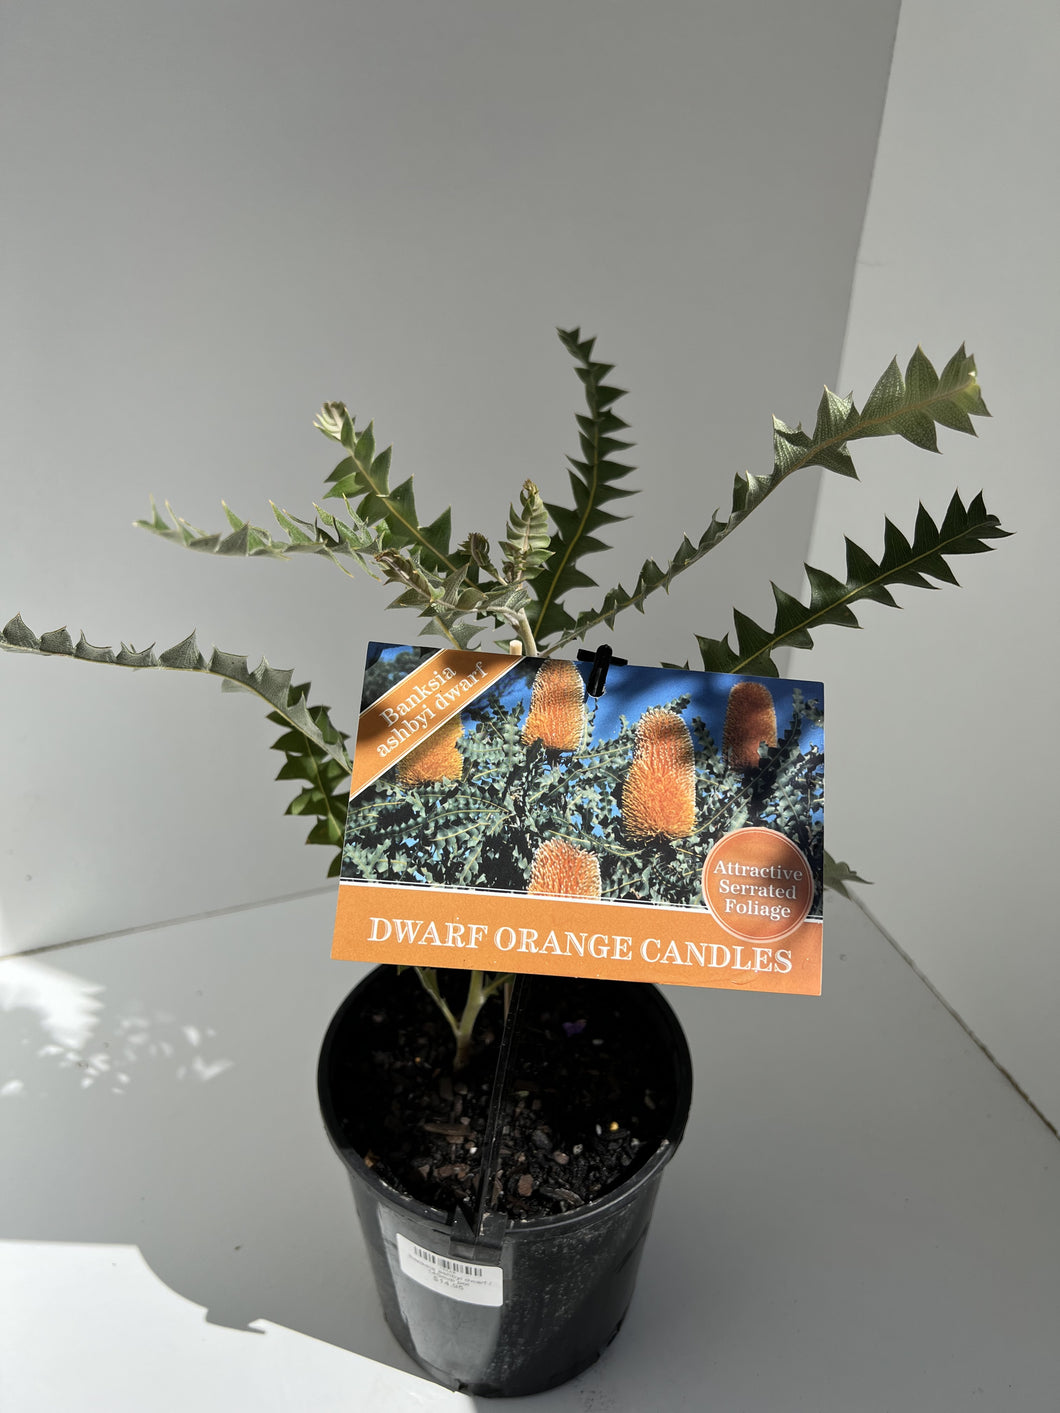 Banksia ashbyi dwarf